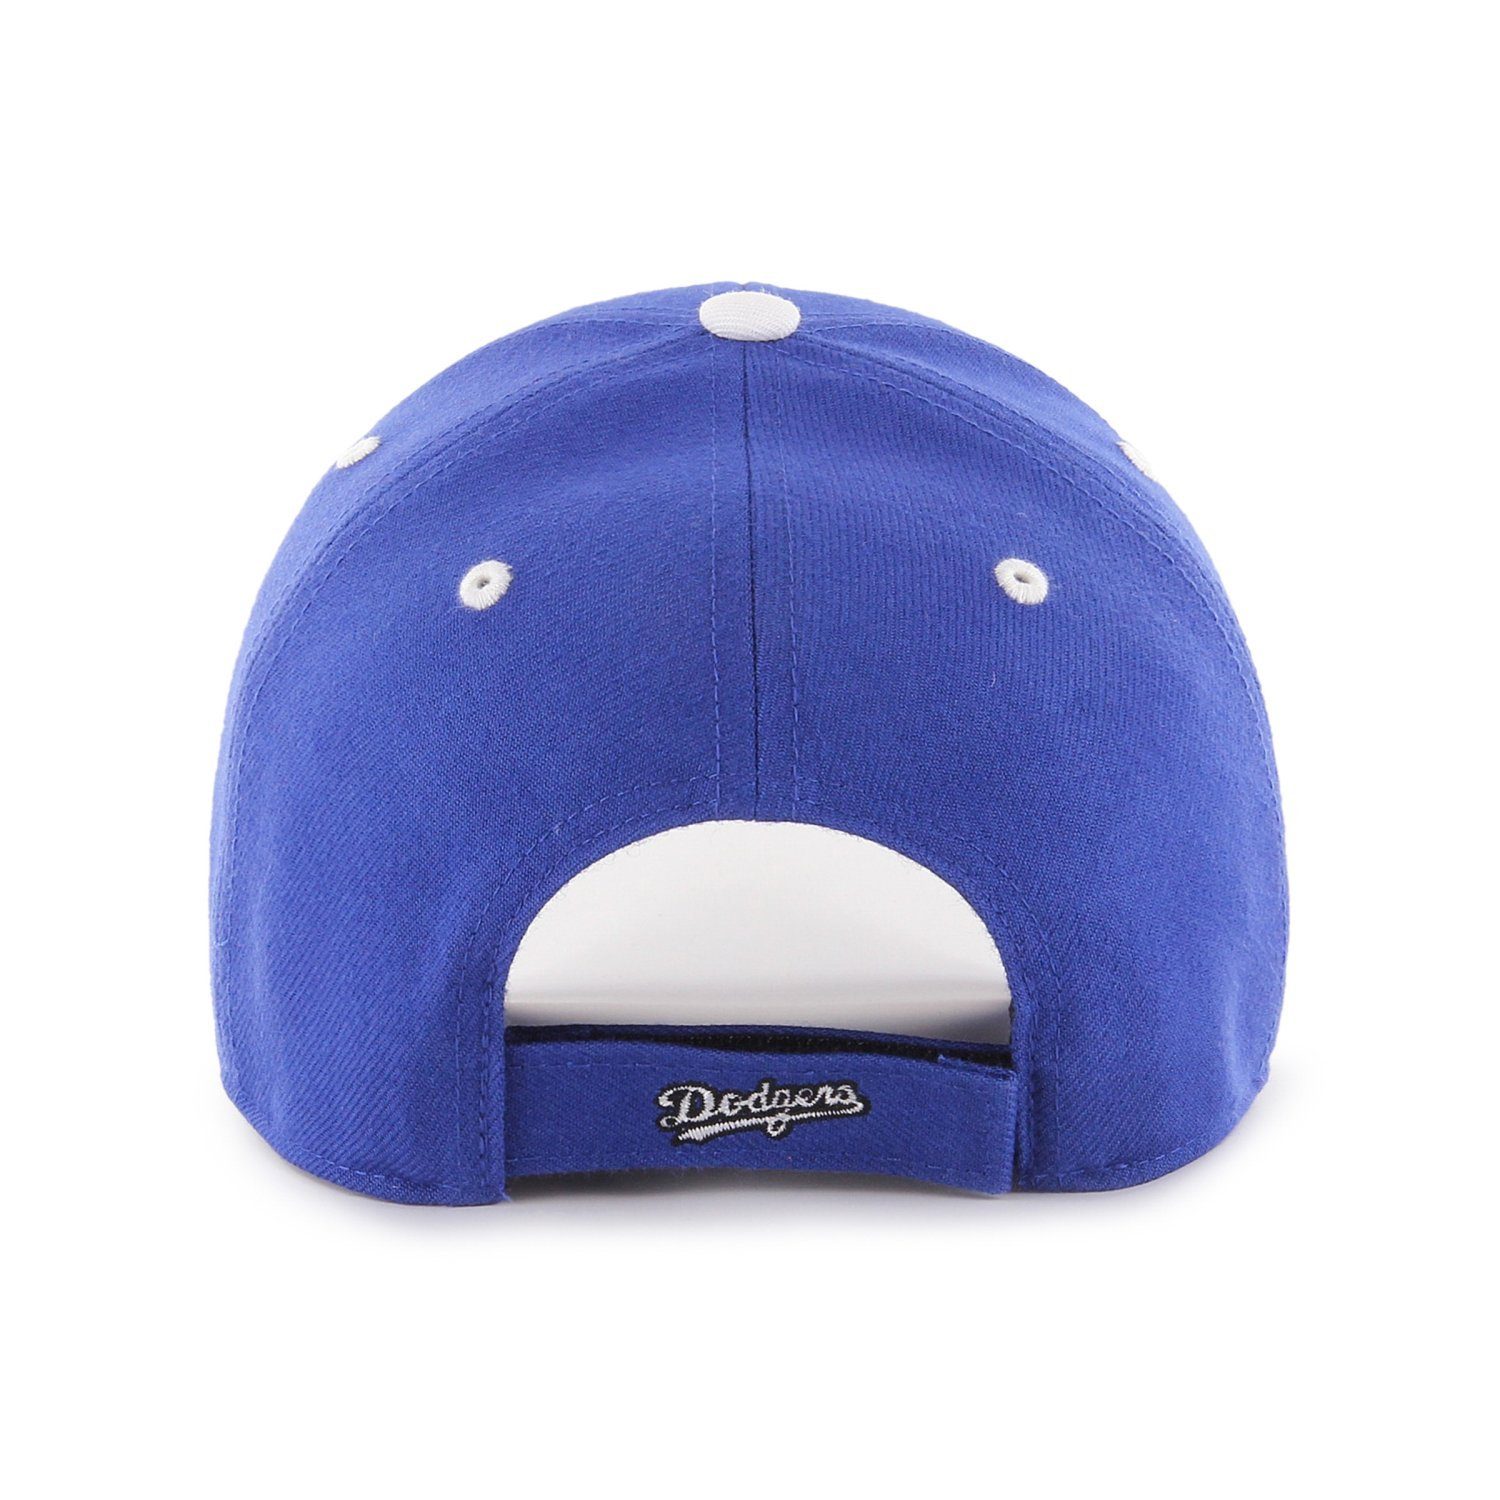 Baseball Cap Dodgers Los '47 Angeles Brand DEFROST